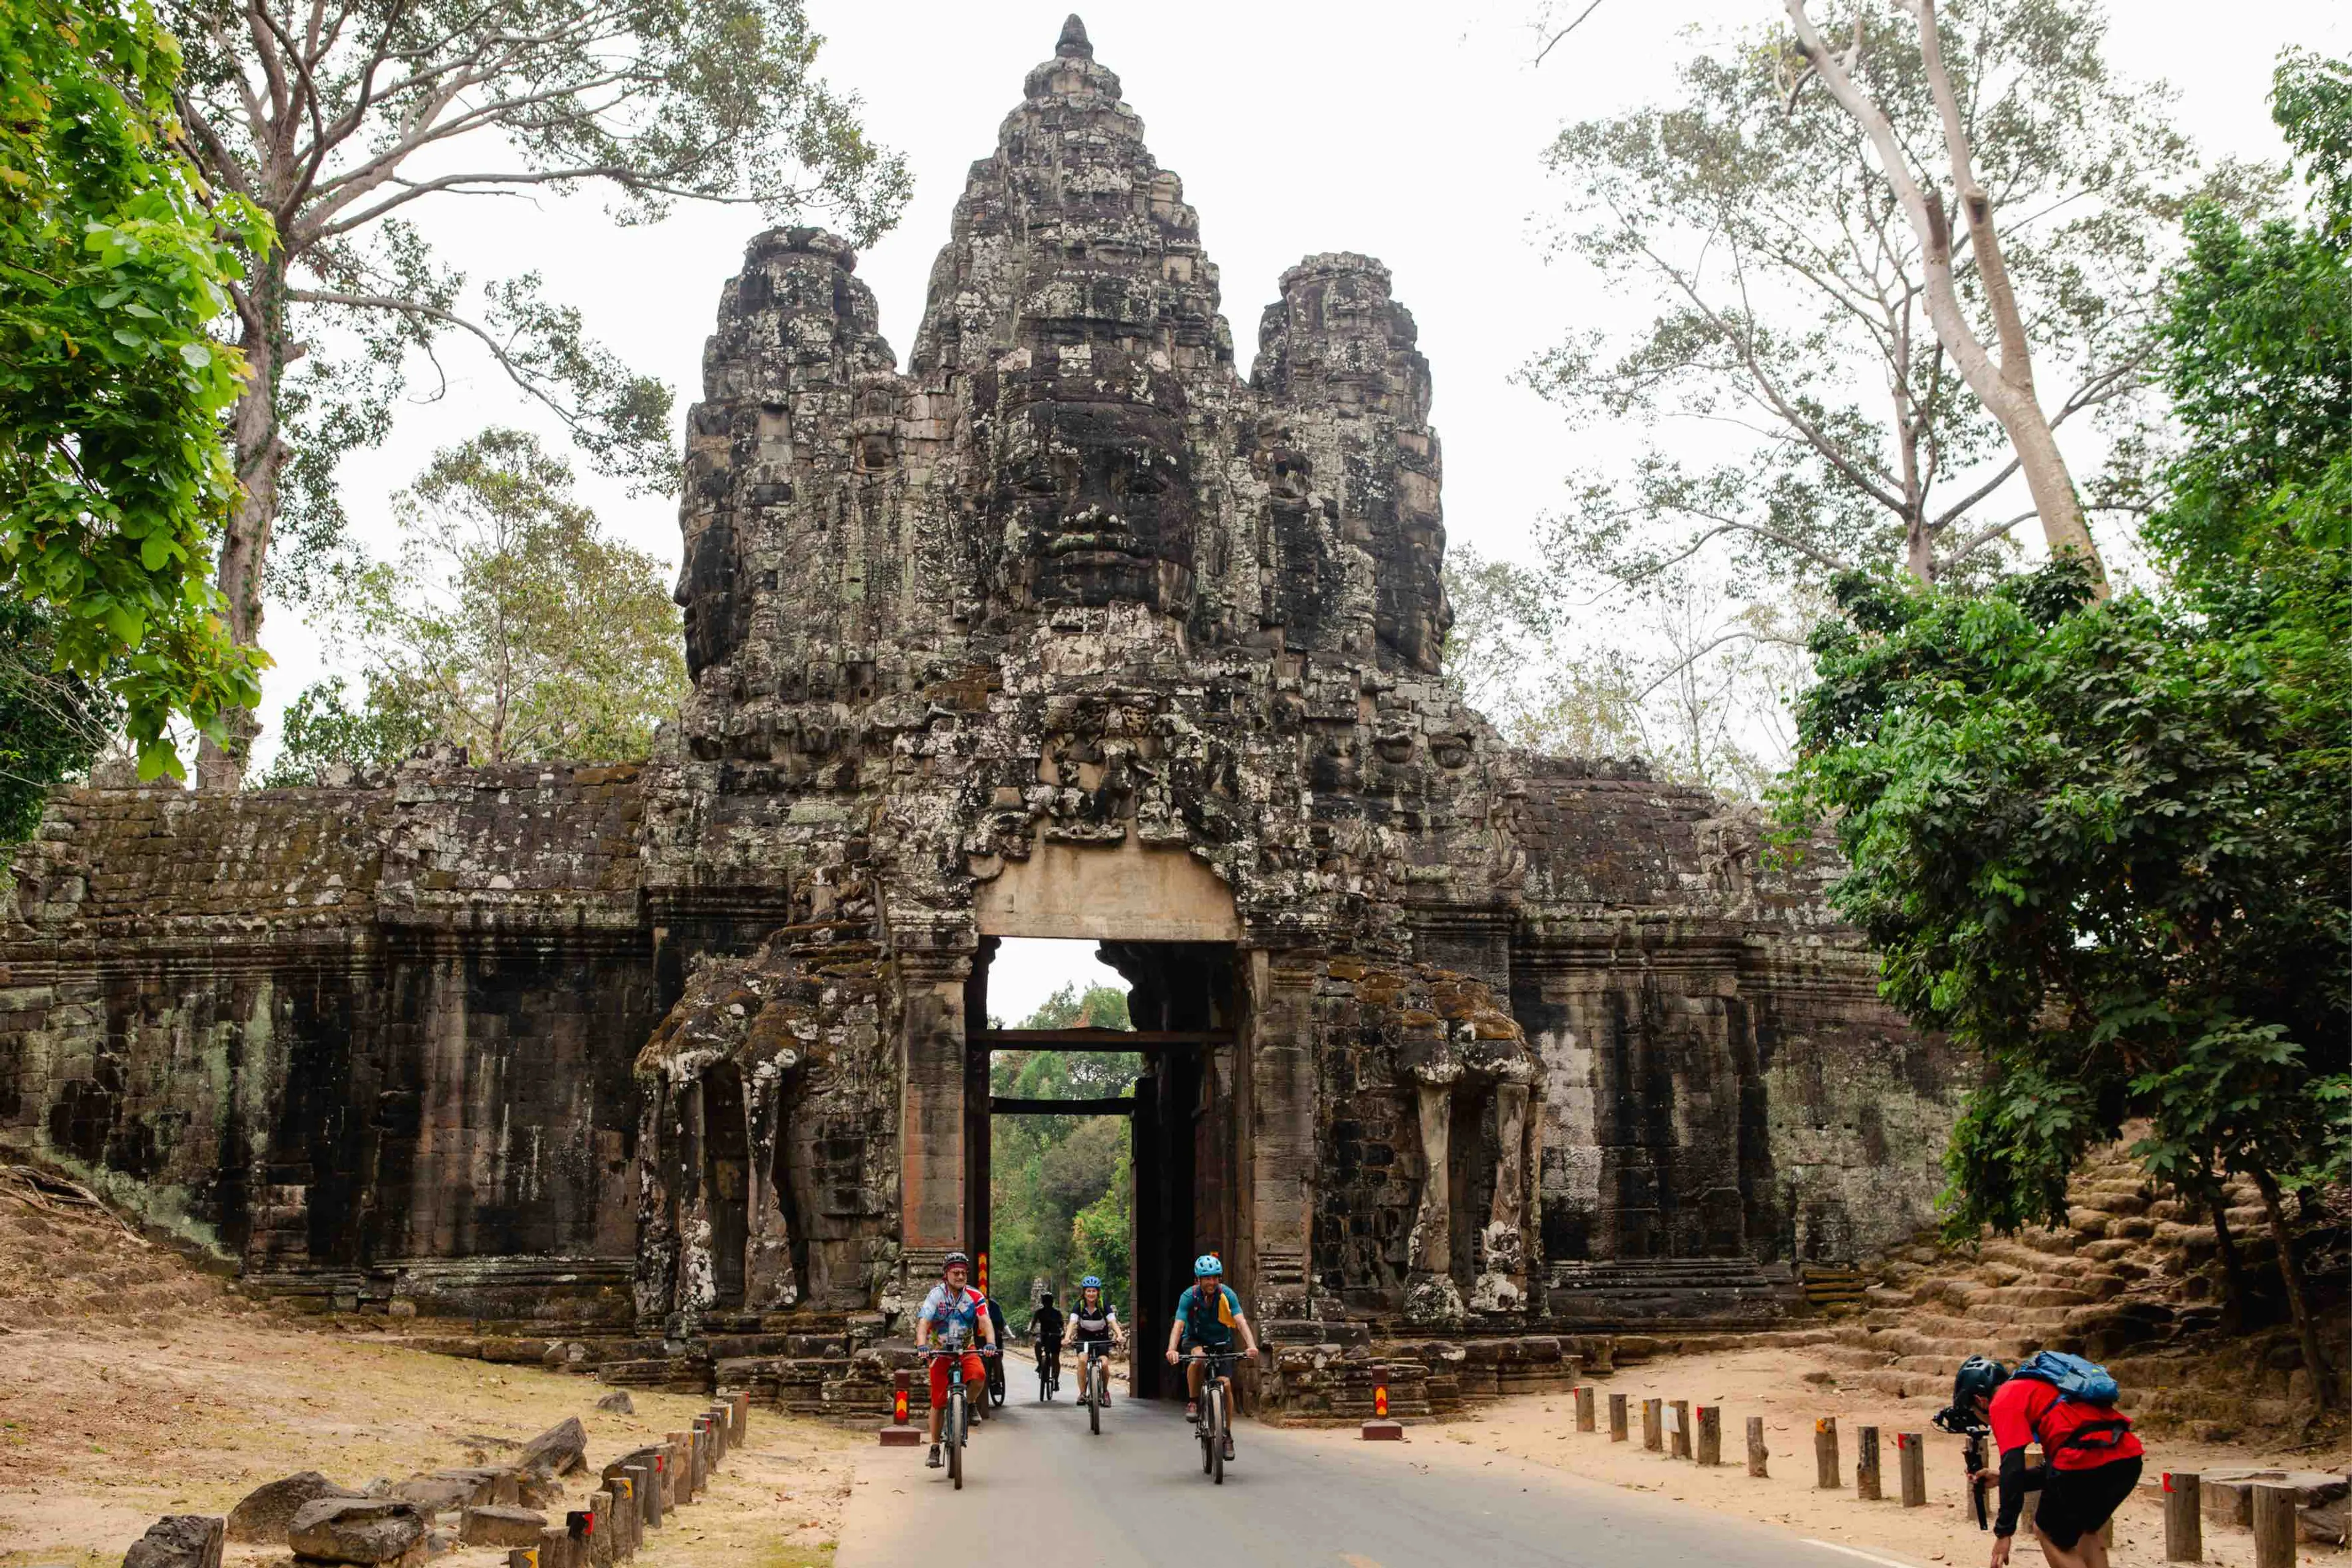 Cycling Indochina: Vietnam to Cambodia Tour Exploration